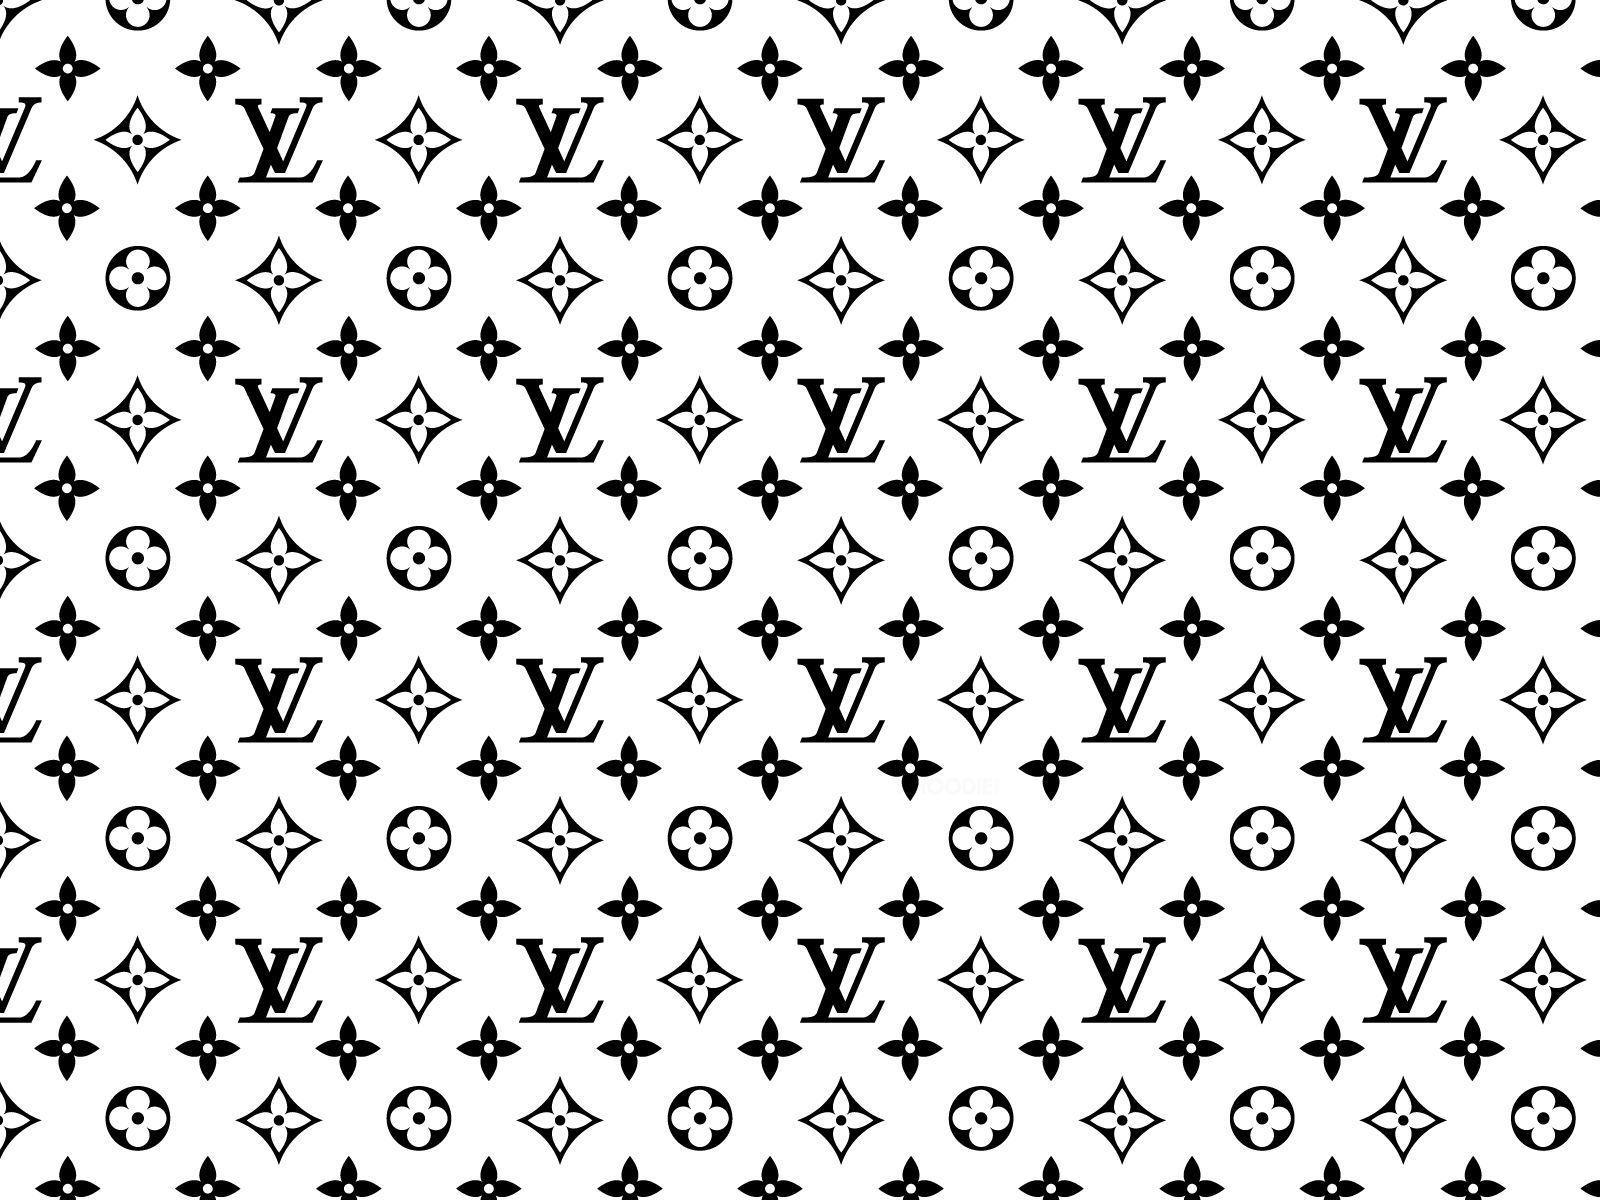 Download Louis Vuitton Monogram Pattern On An Orange Background Wallpaper